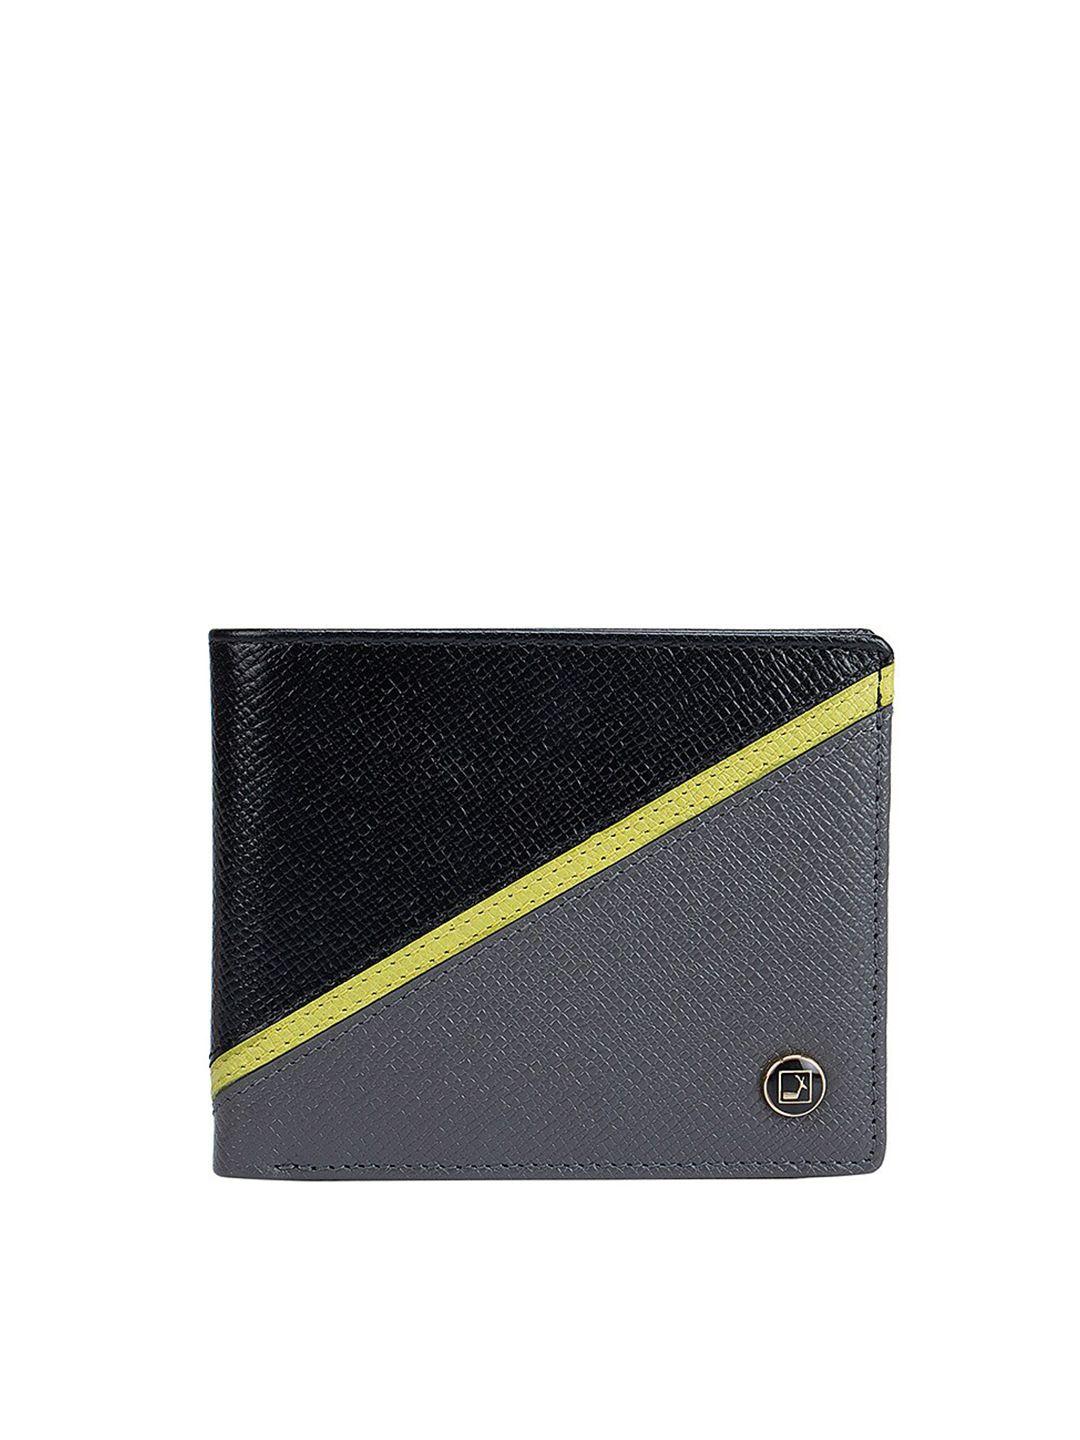 da milano men black & yellow textured leather two fold wallet